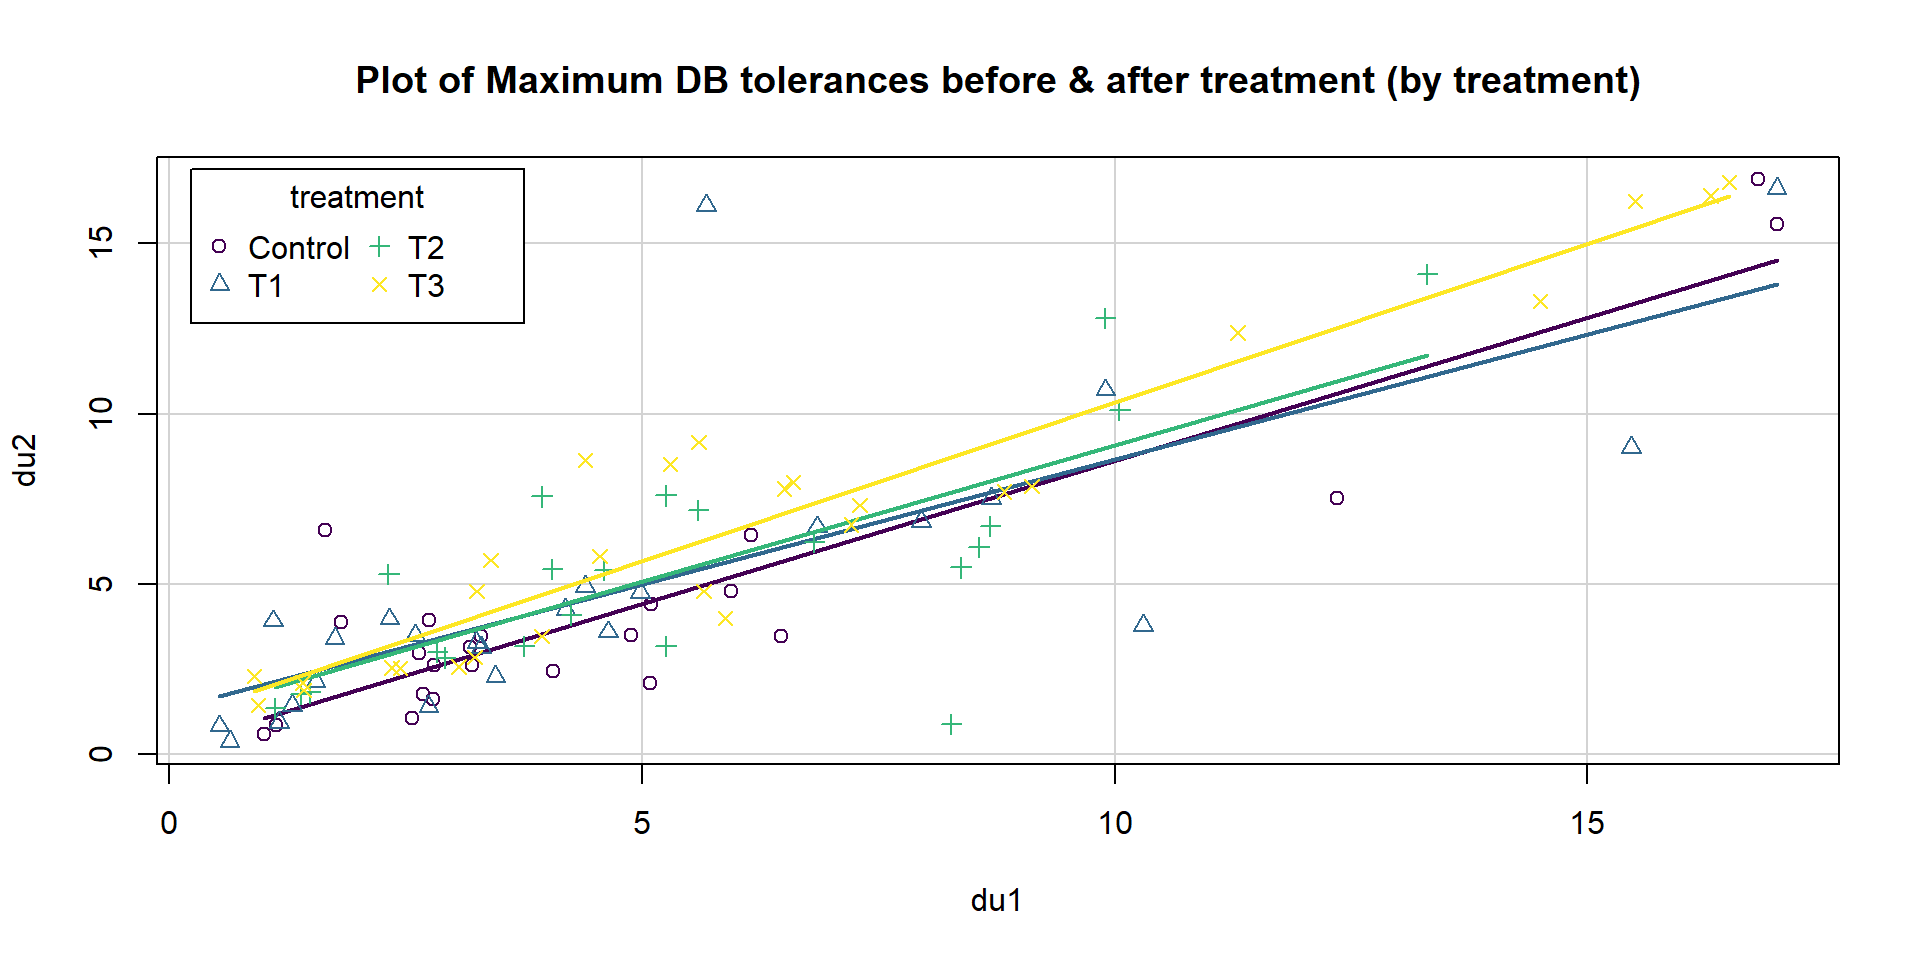 Scatterplot of post-treatment decibel tolerance (du2) vs pre-treatment tolerance (du1) by treatment level (4 groups).